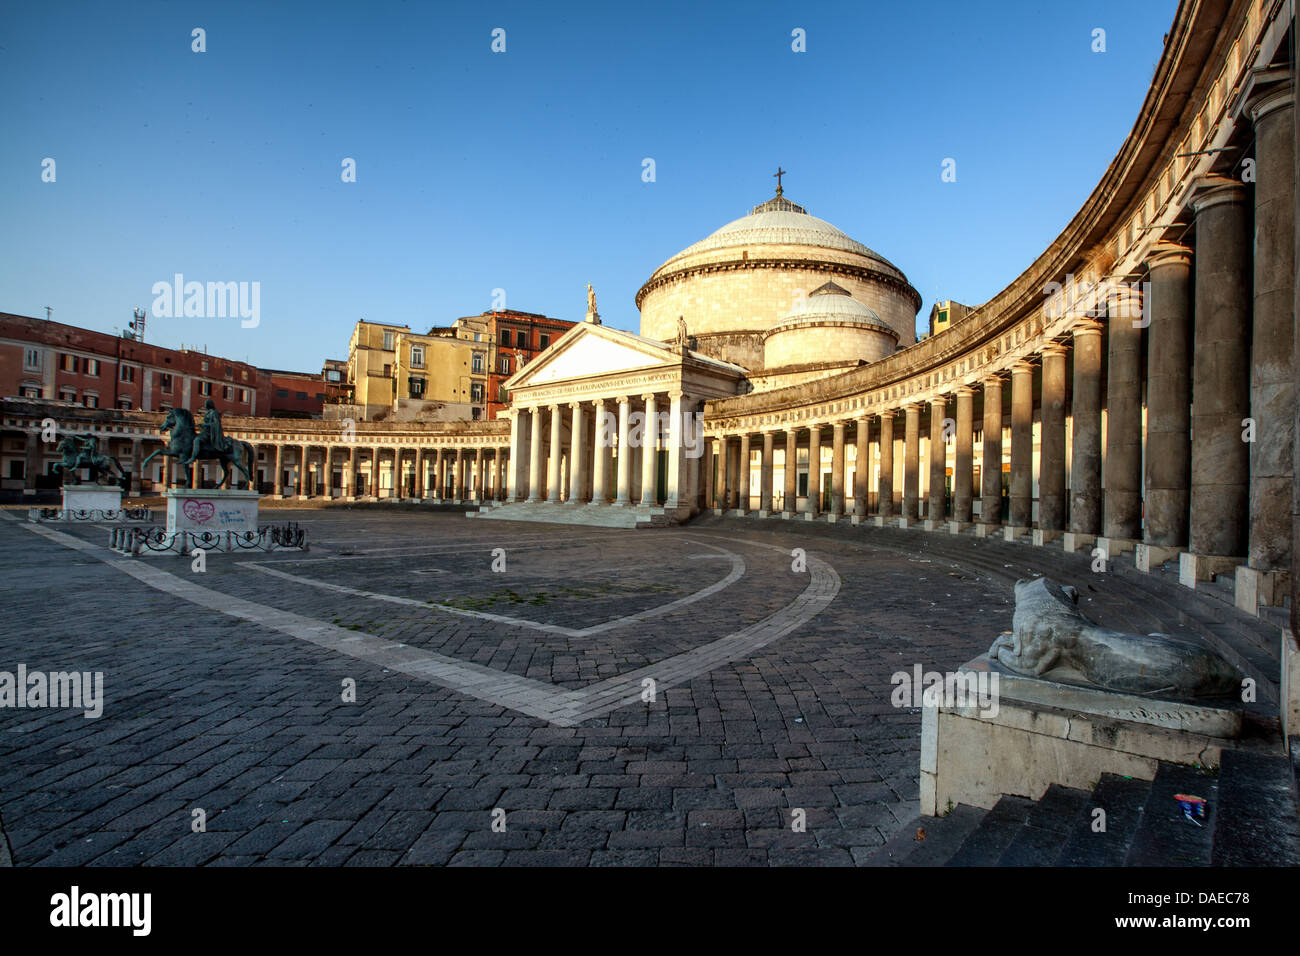 Naples, Square of the plebiscite Stock Photo